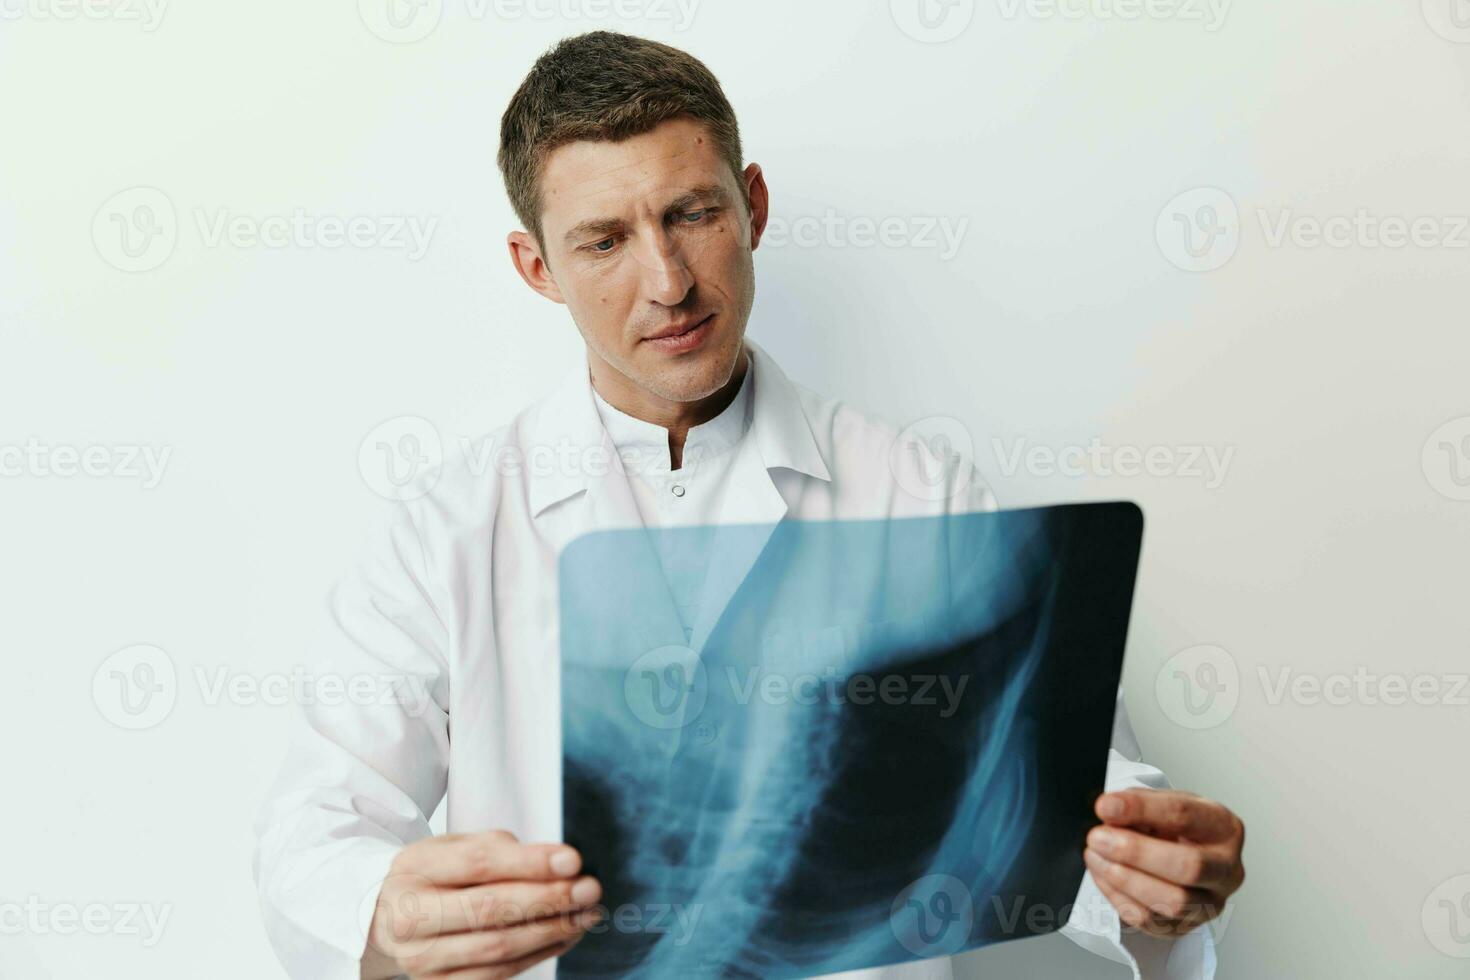 Exam consultation disease physician profession cancer lab specialist stethoscope surgeon medic photo